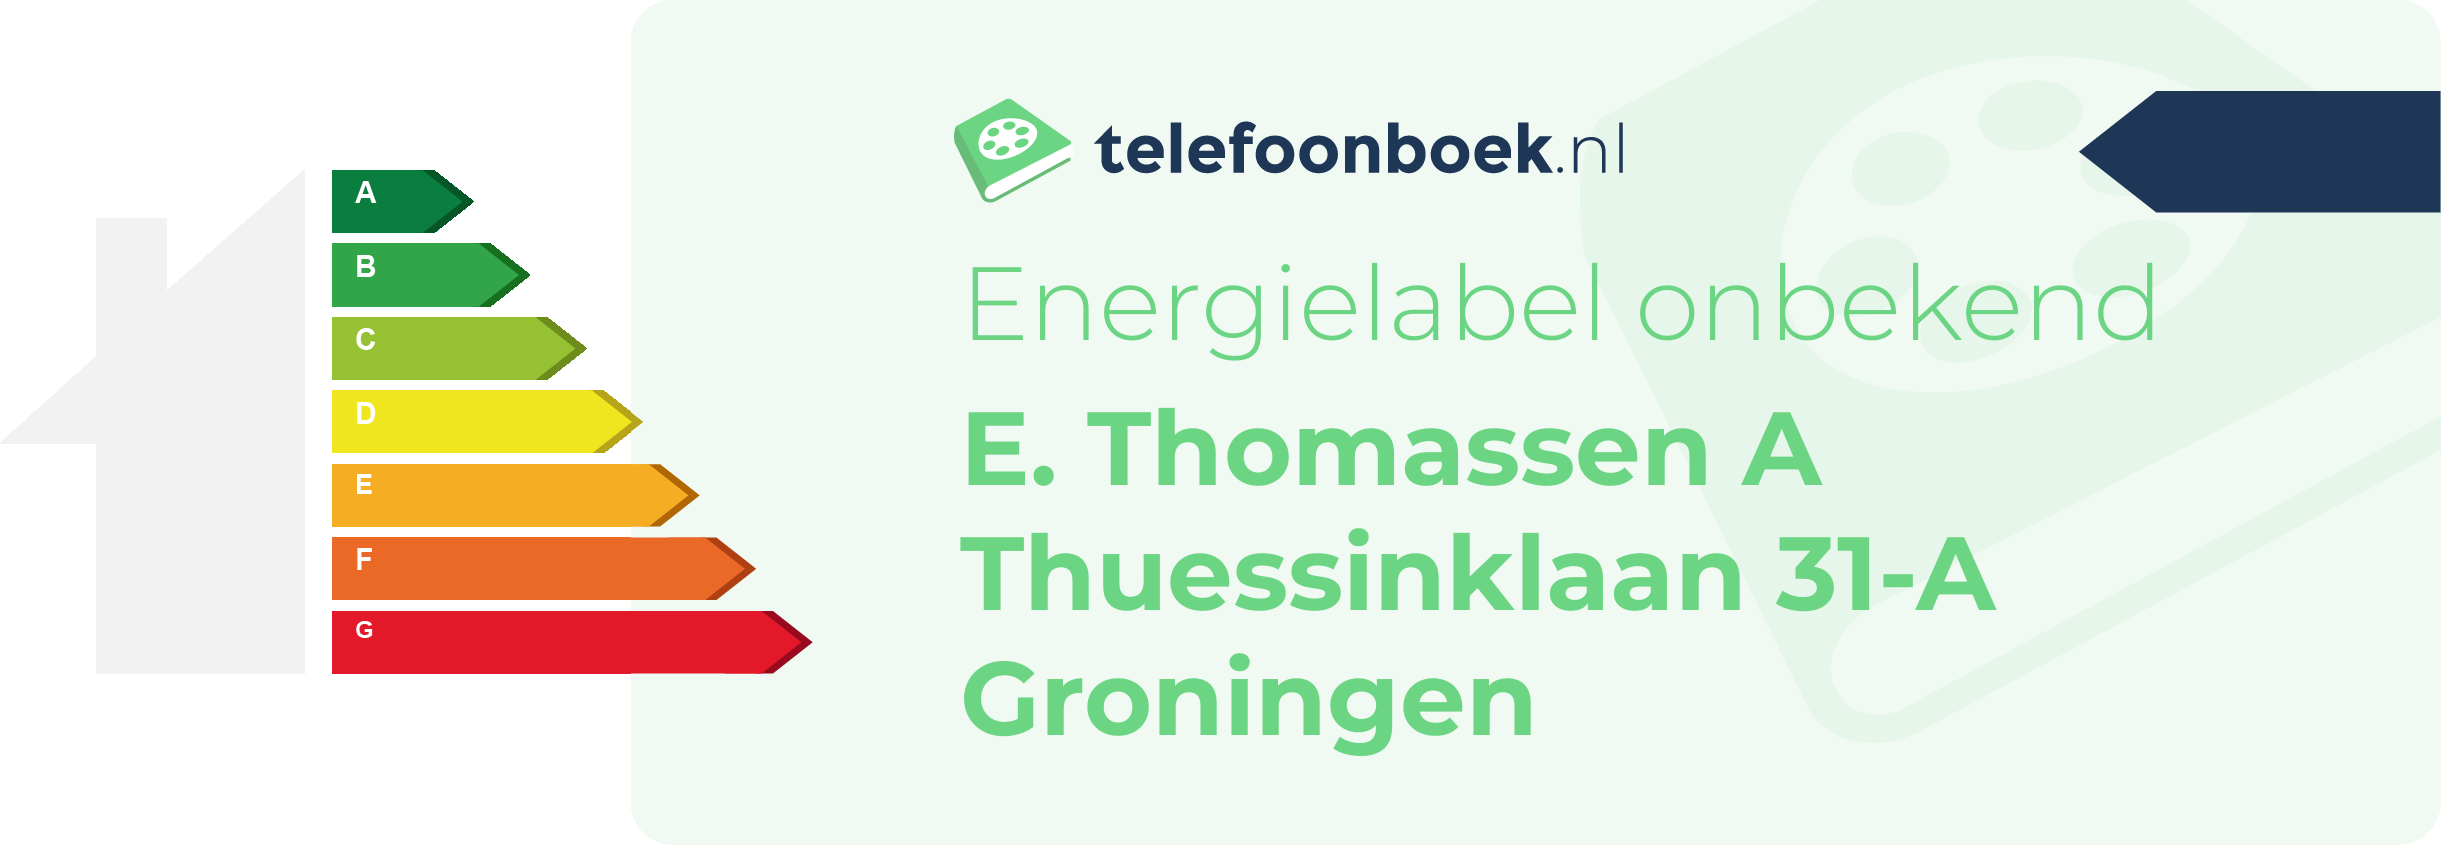 Energielabel E. Thomassen A Thuessinklaan 31-A Groningen